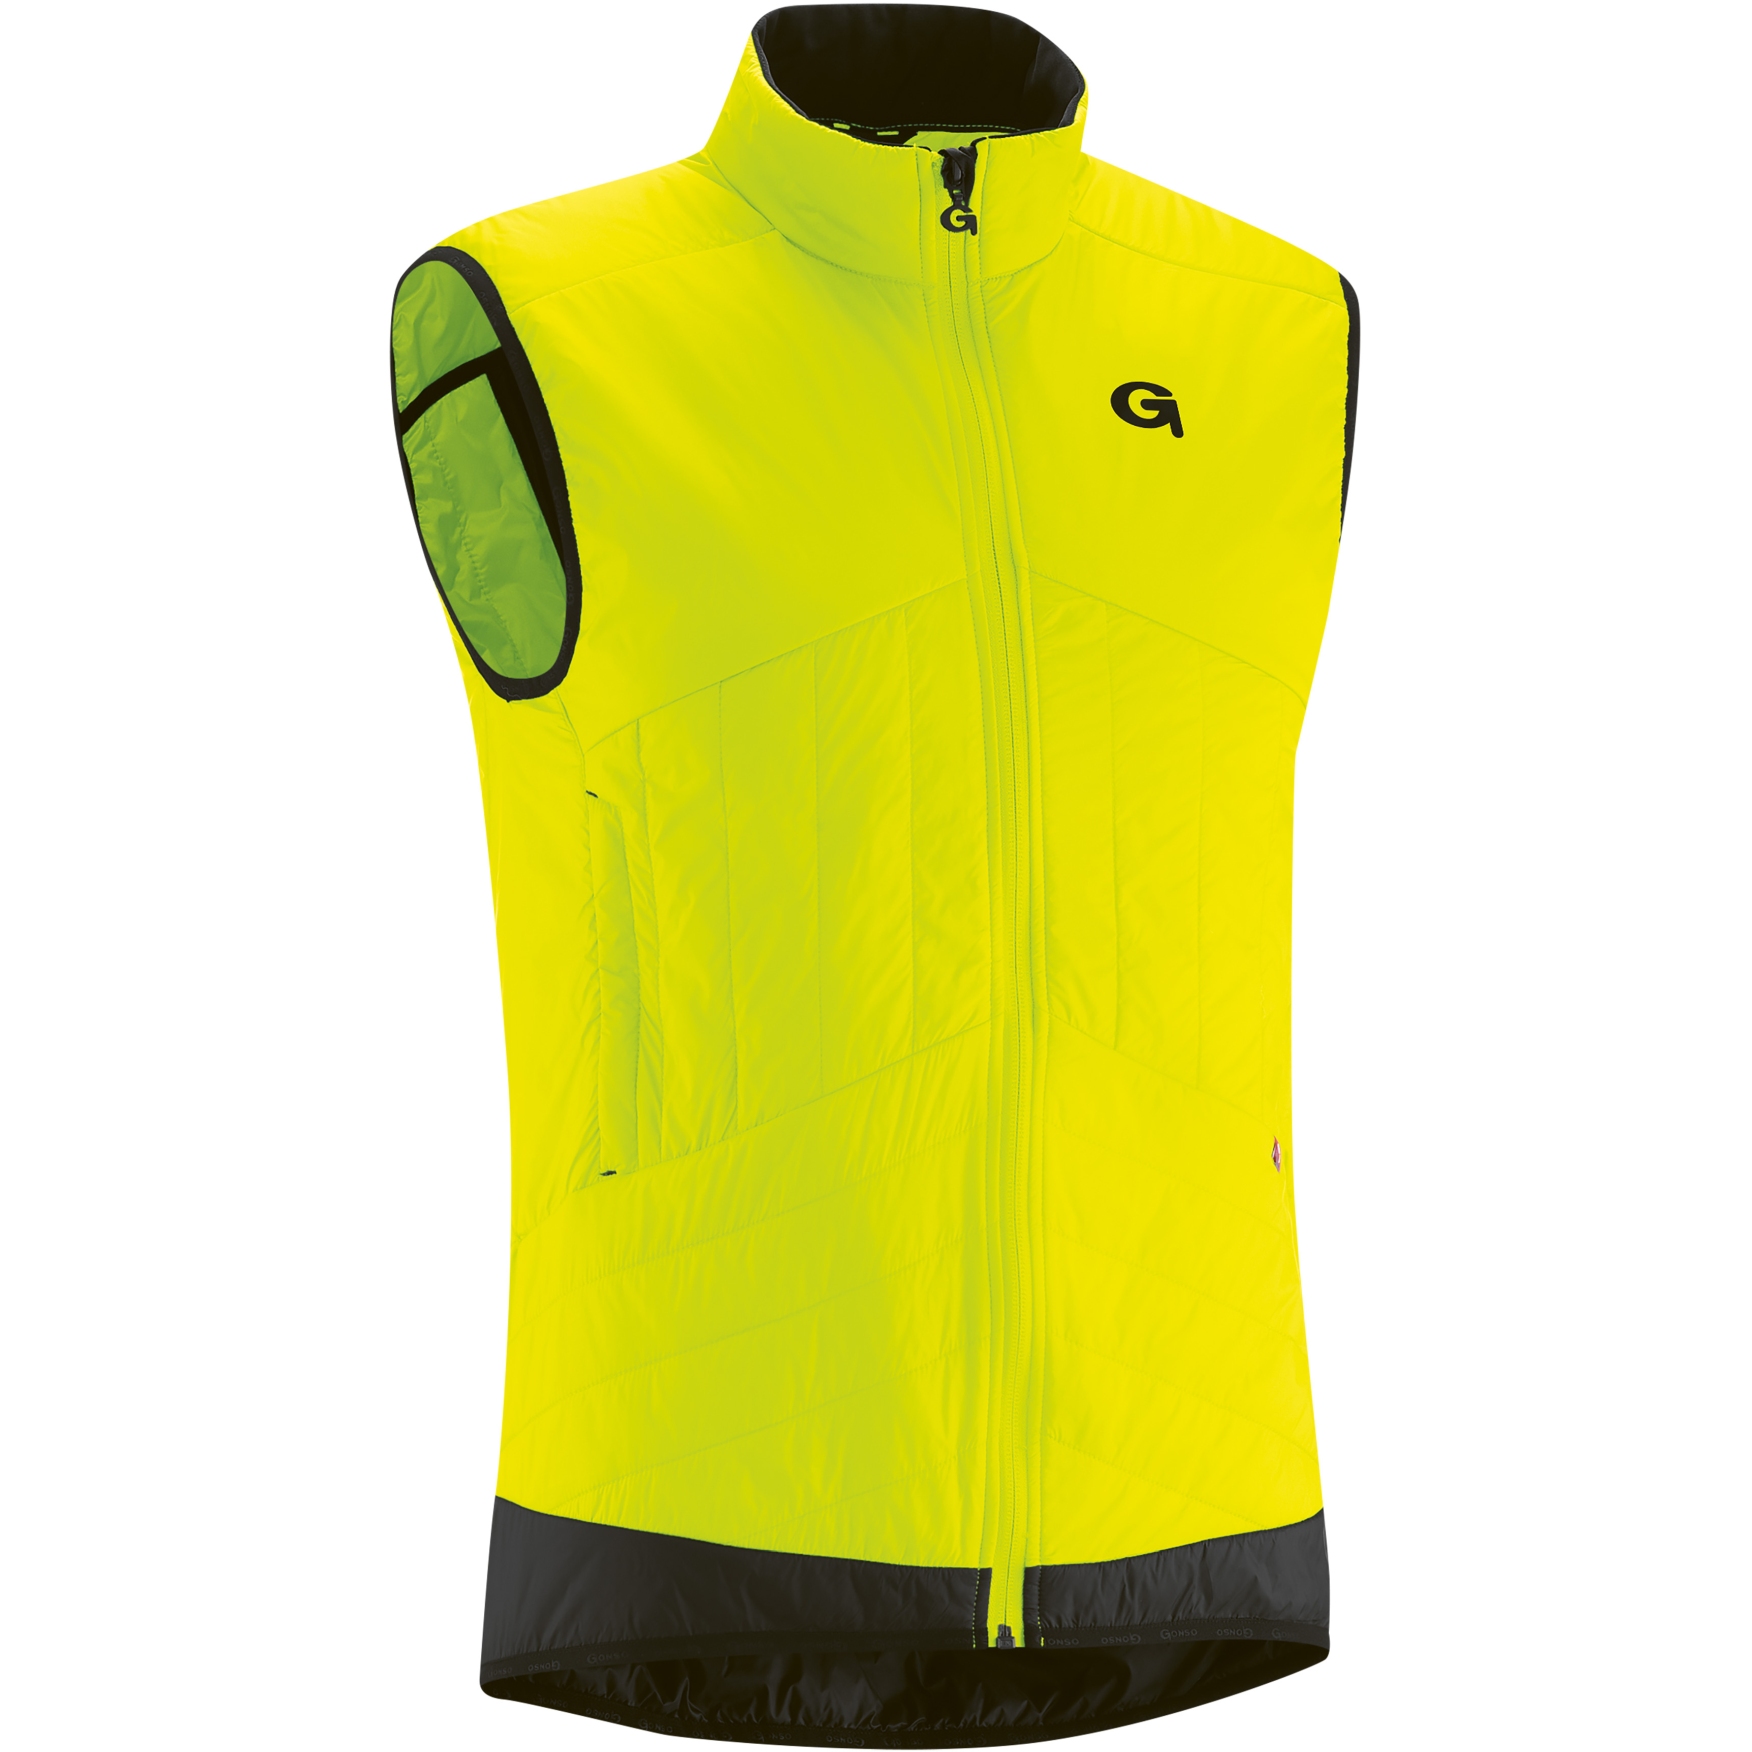 https://images.bike24.com/i/mb/ab/cc/8e/gonso-ruivo-mens-bike-vest-safety-yellow-1-1057929.jpg